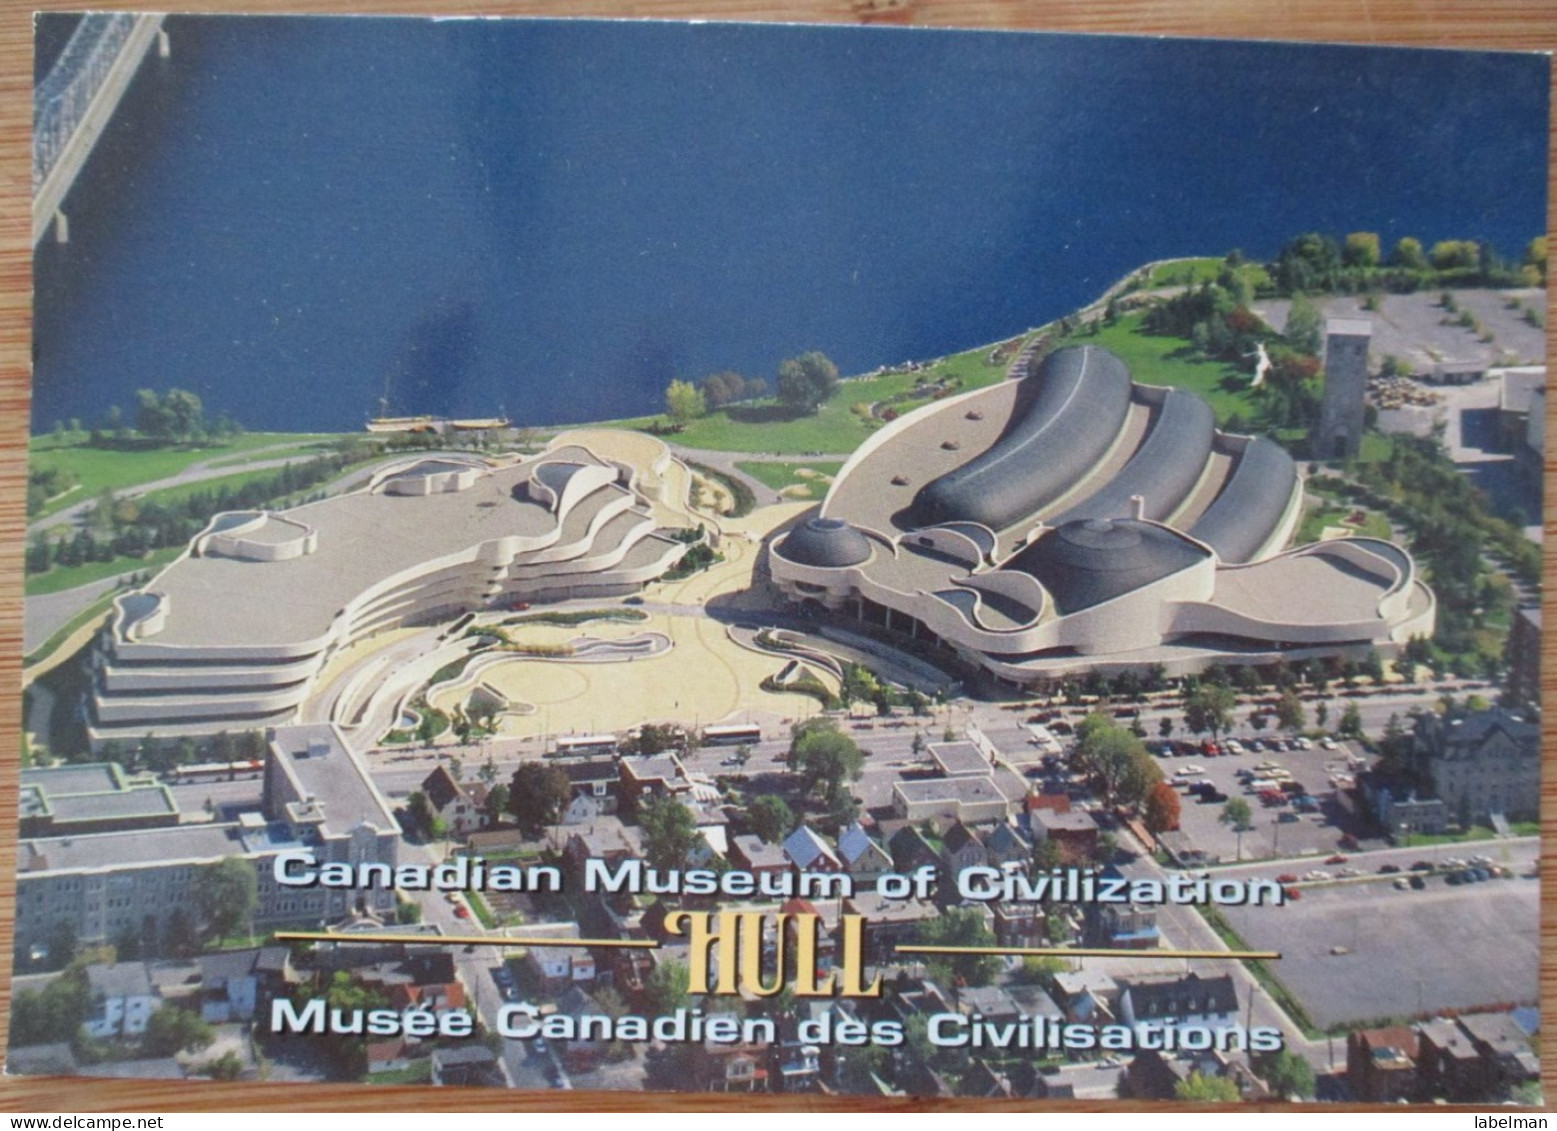 CANADA MUSEUM OF CIVILISATIONS HULL POSTCARD KARTE CARD CARTE POSTALE ANSICHTSKARTE POSTKARTE CARTOLINA - Granby